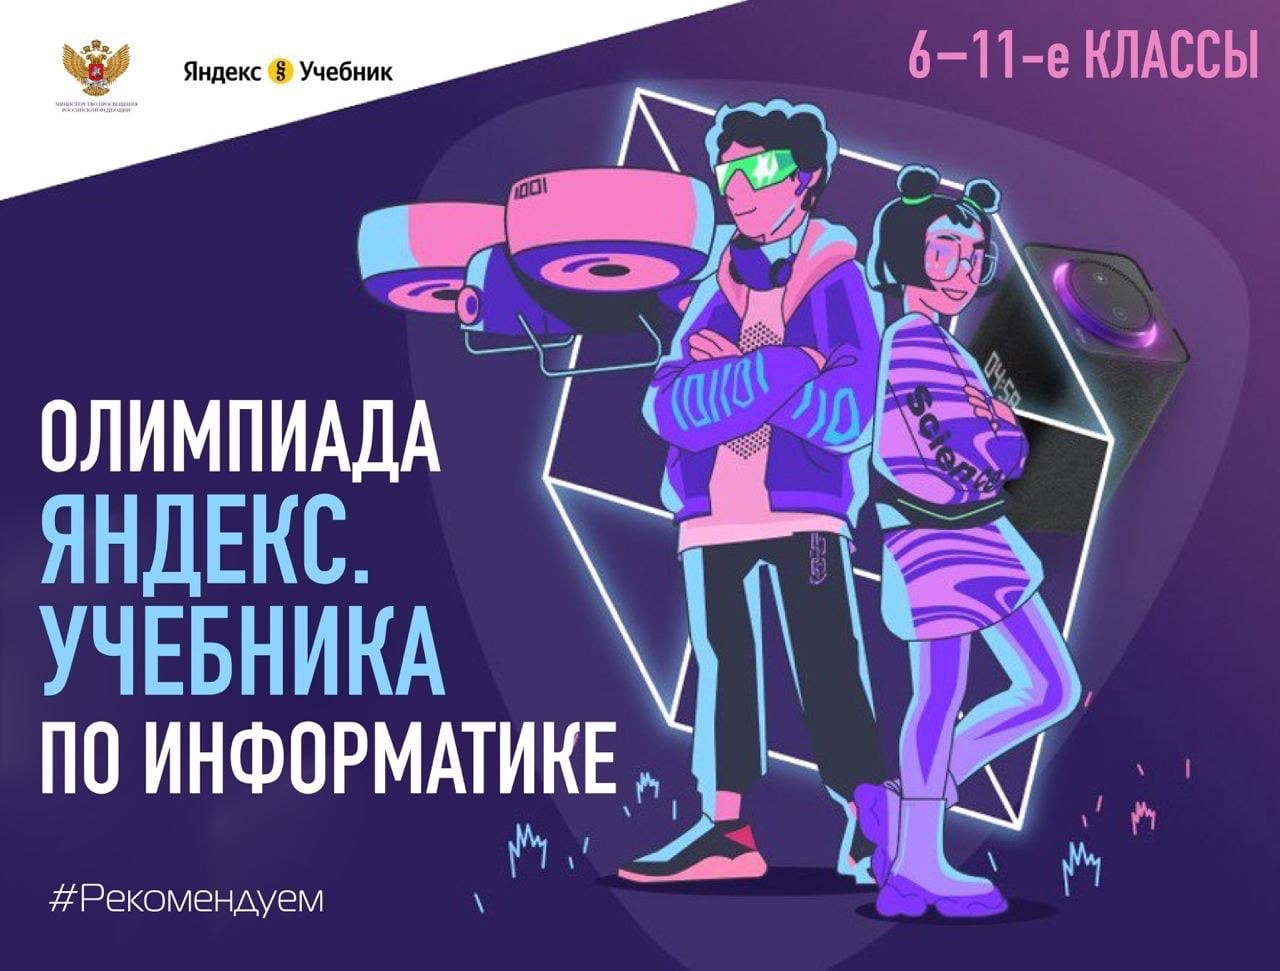 Обучающая олимпиада по информатике от Яндекс Учебника.